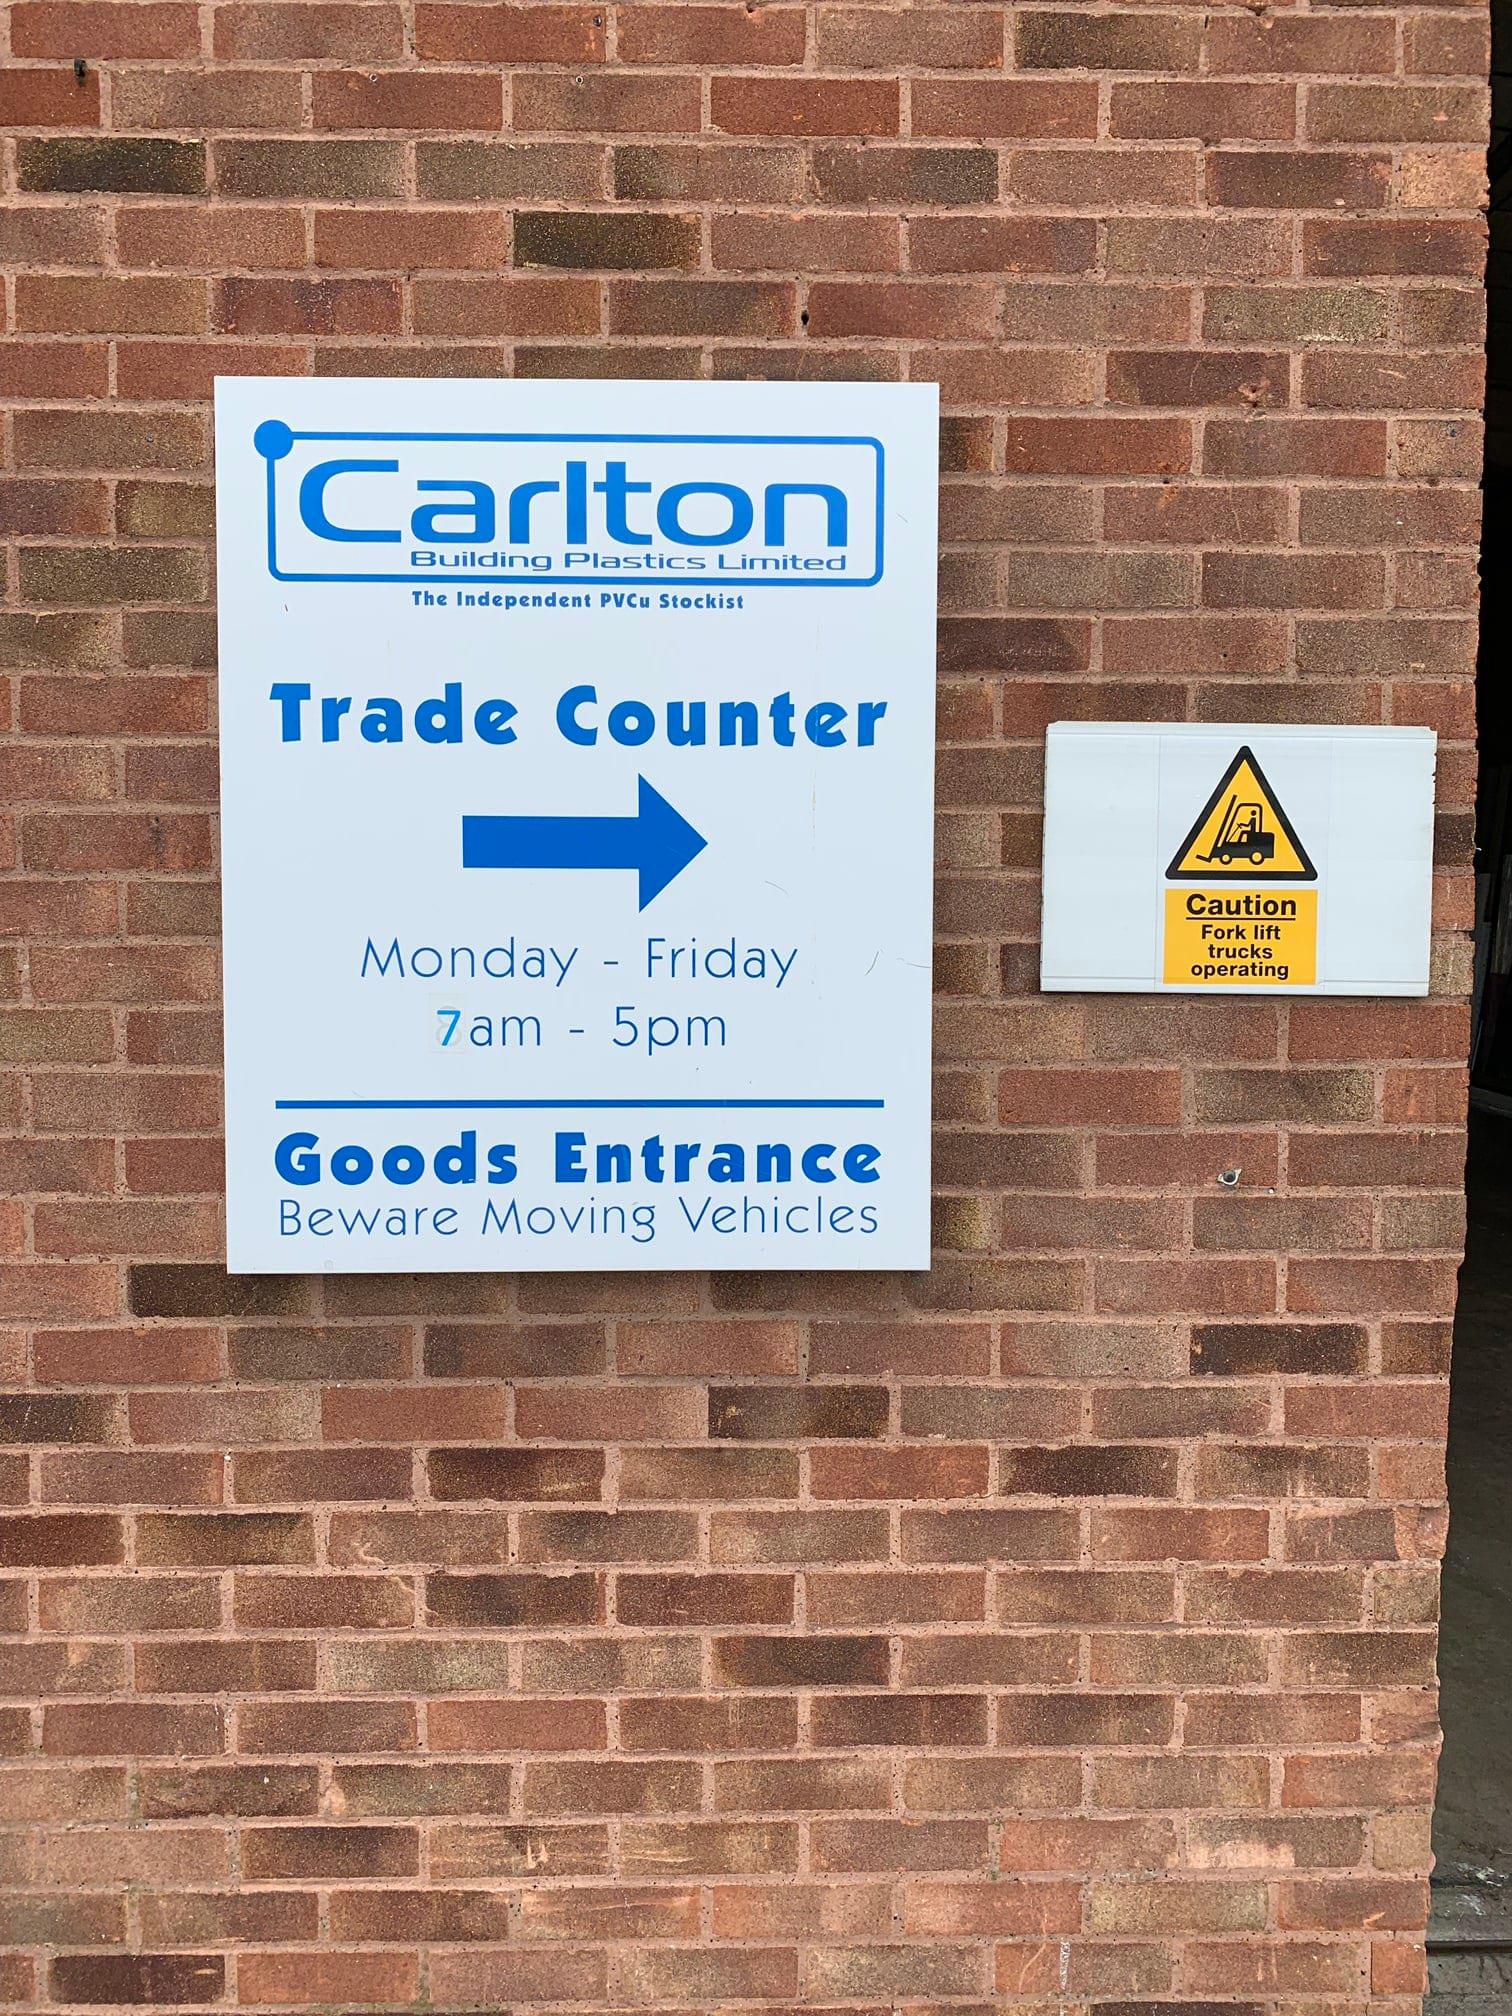 Carlton Building Plastics Ltd Croydon 020 8665 1221